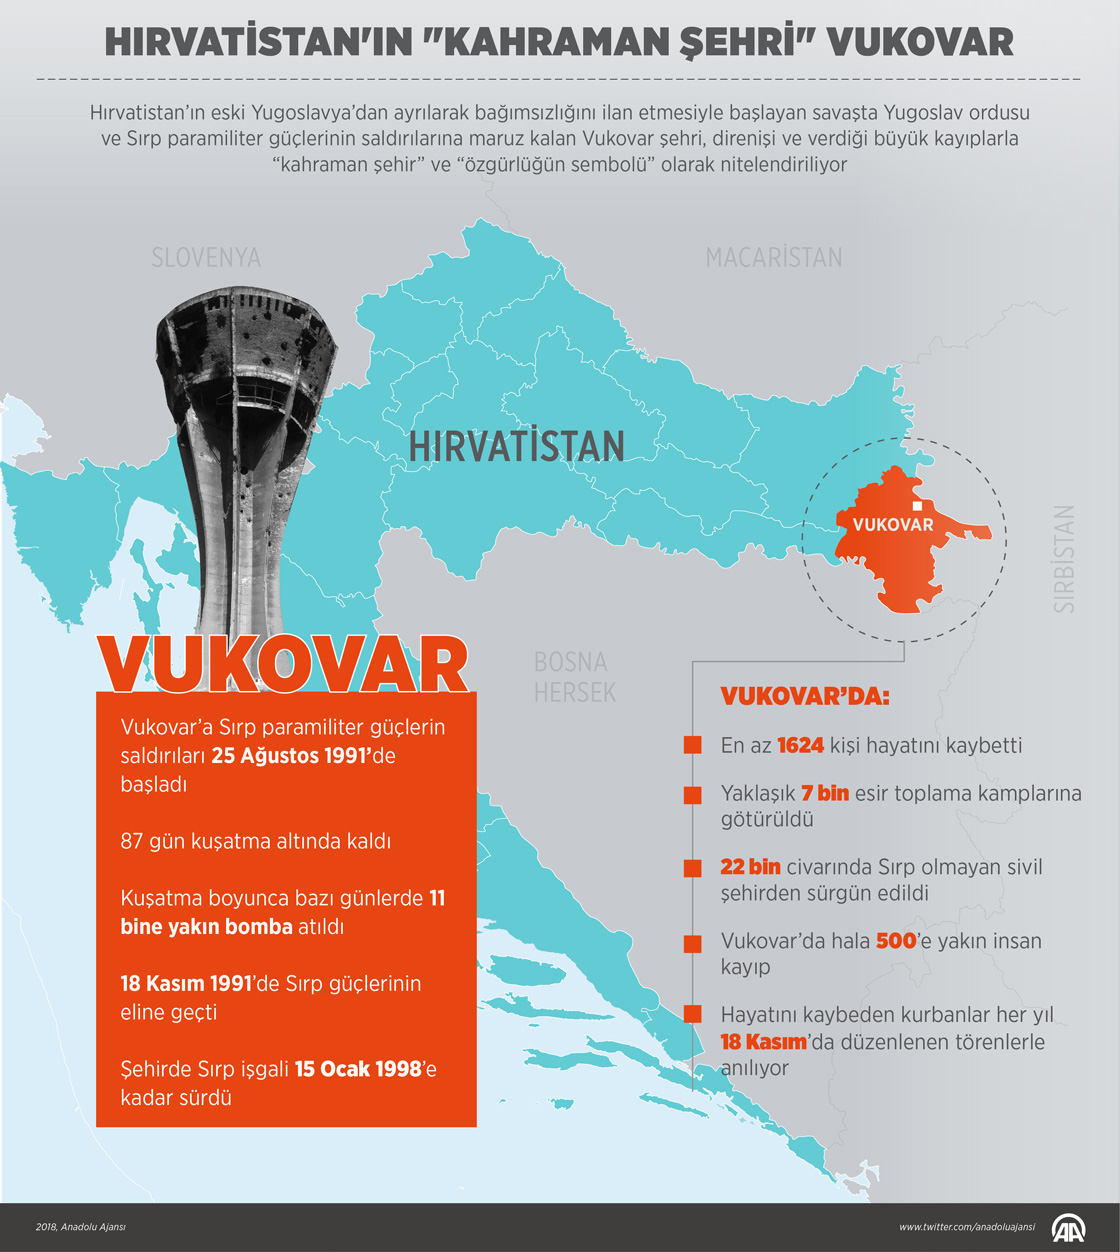 Hırvatistan'ın "kahraman şehri" Vukovar